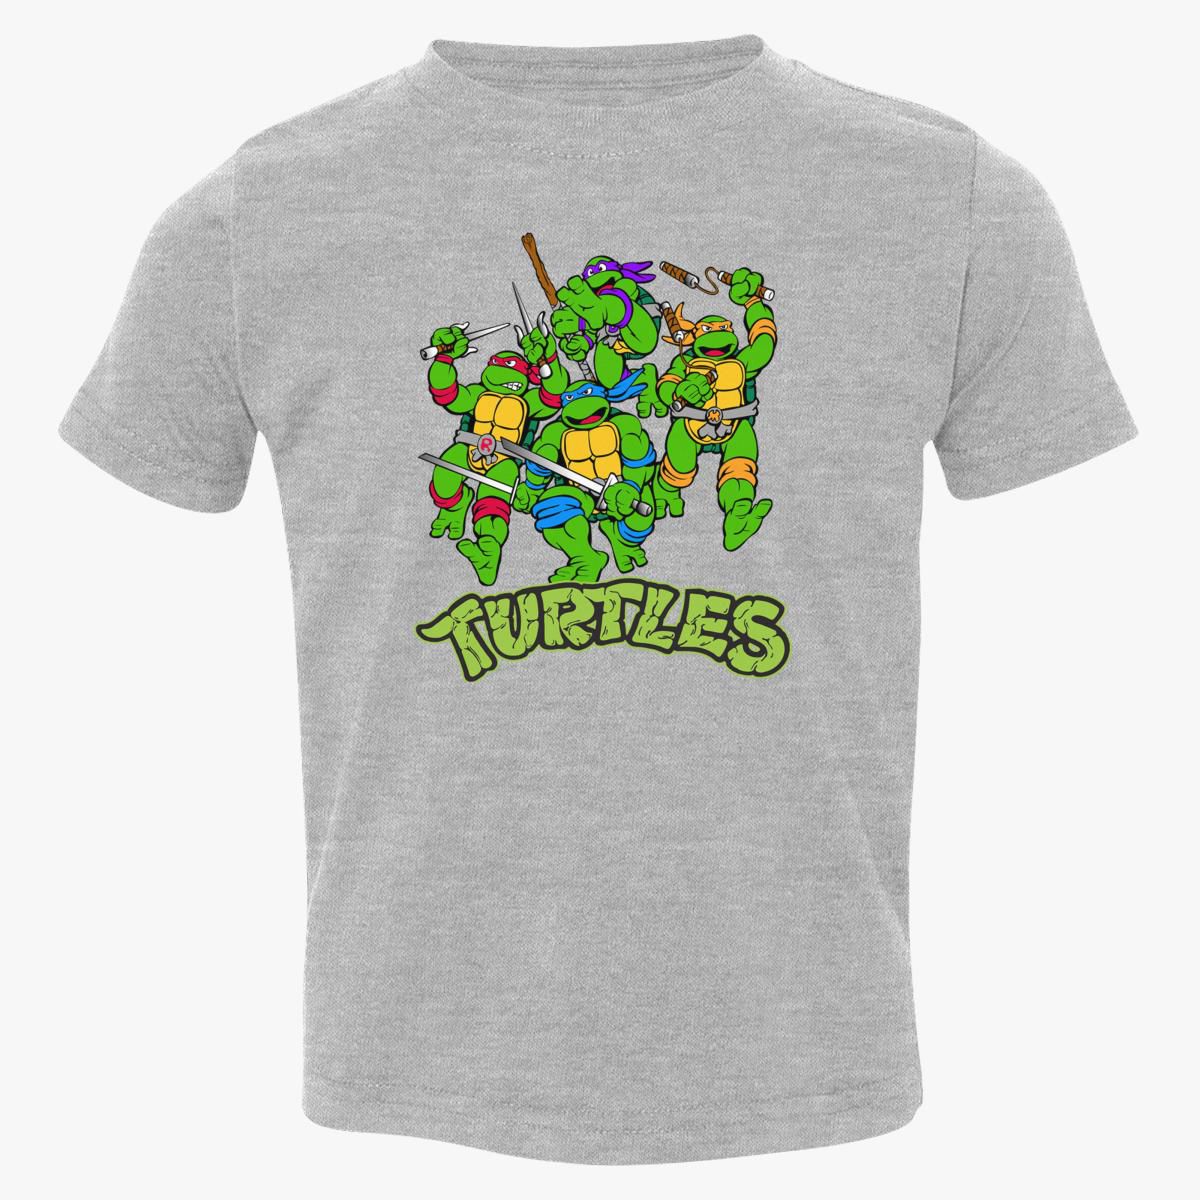 baby ninja turtle shirt